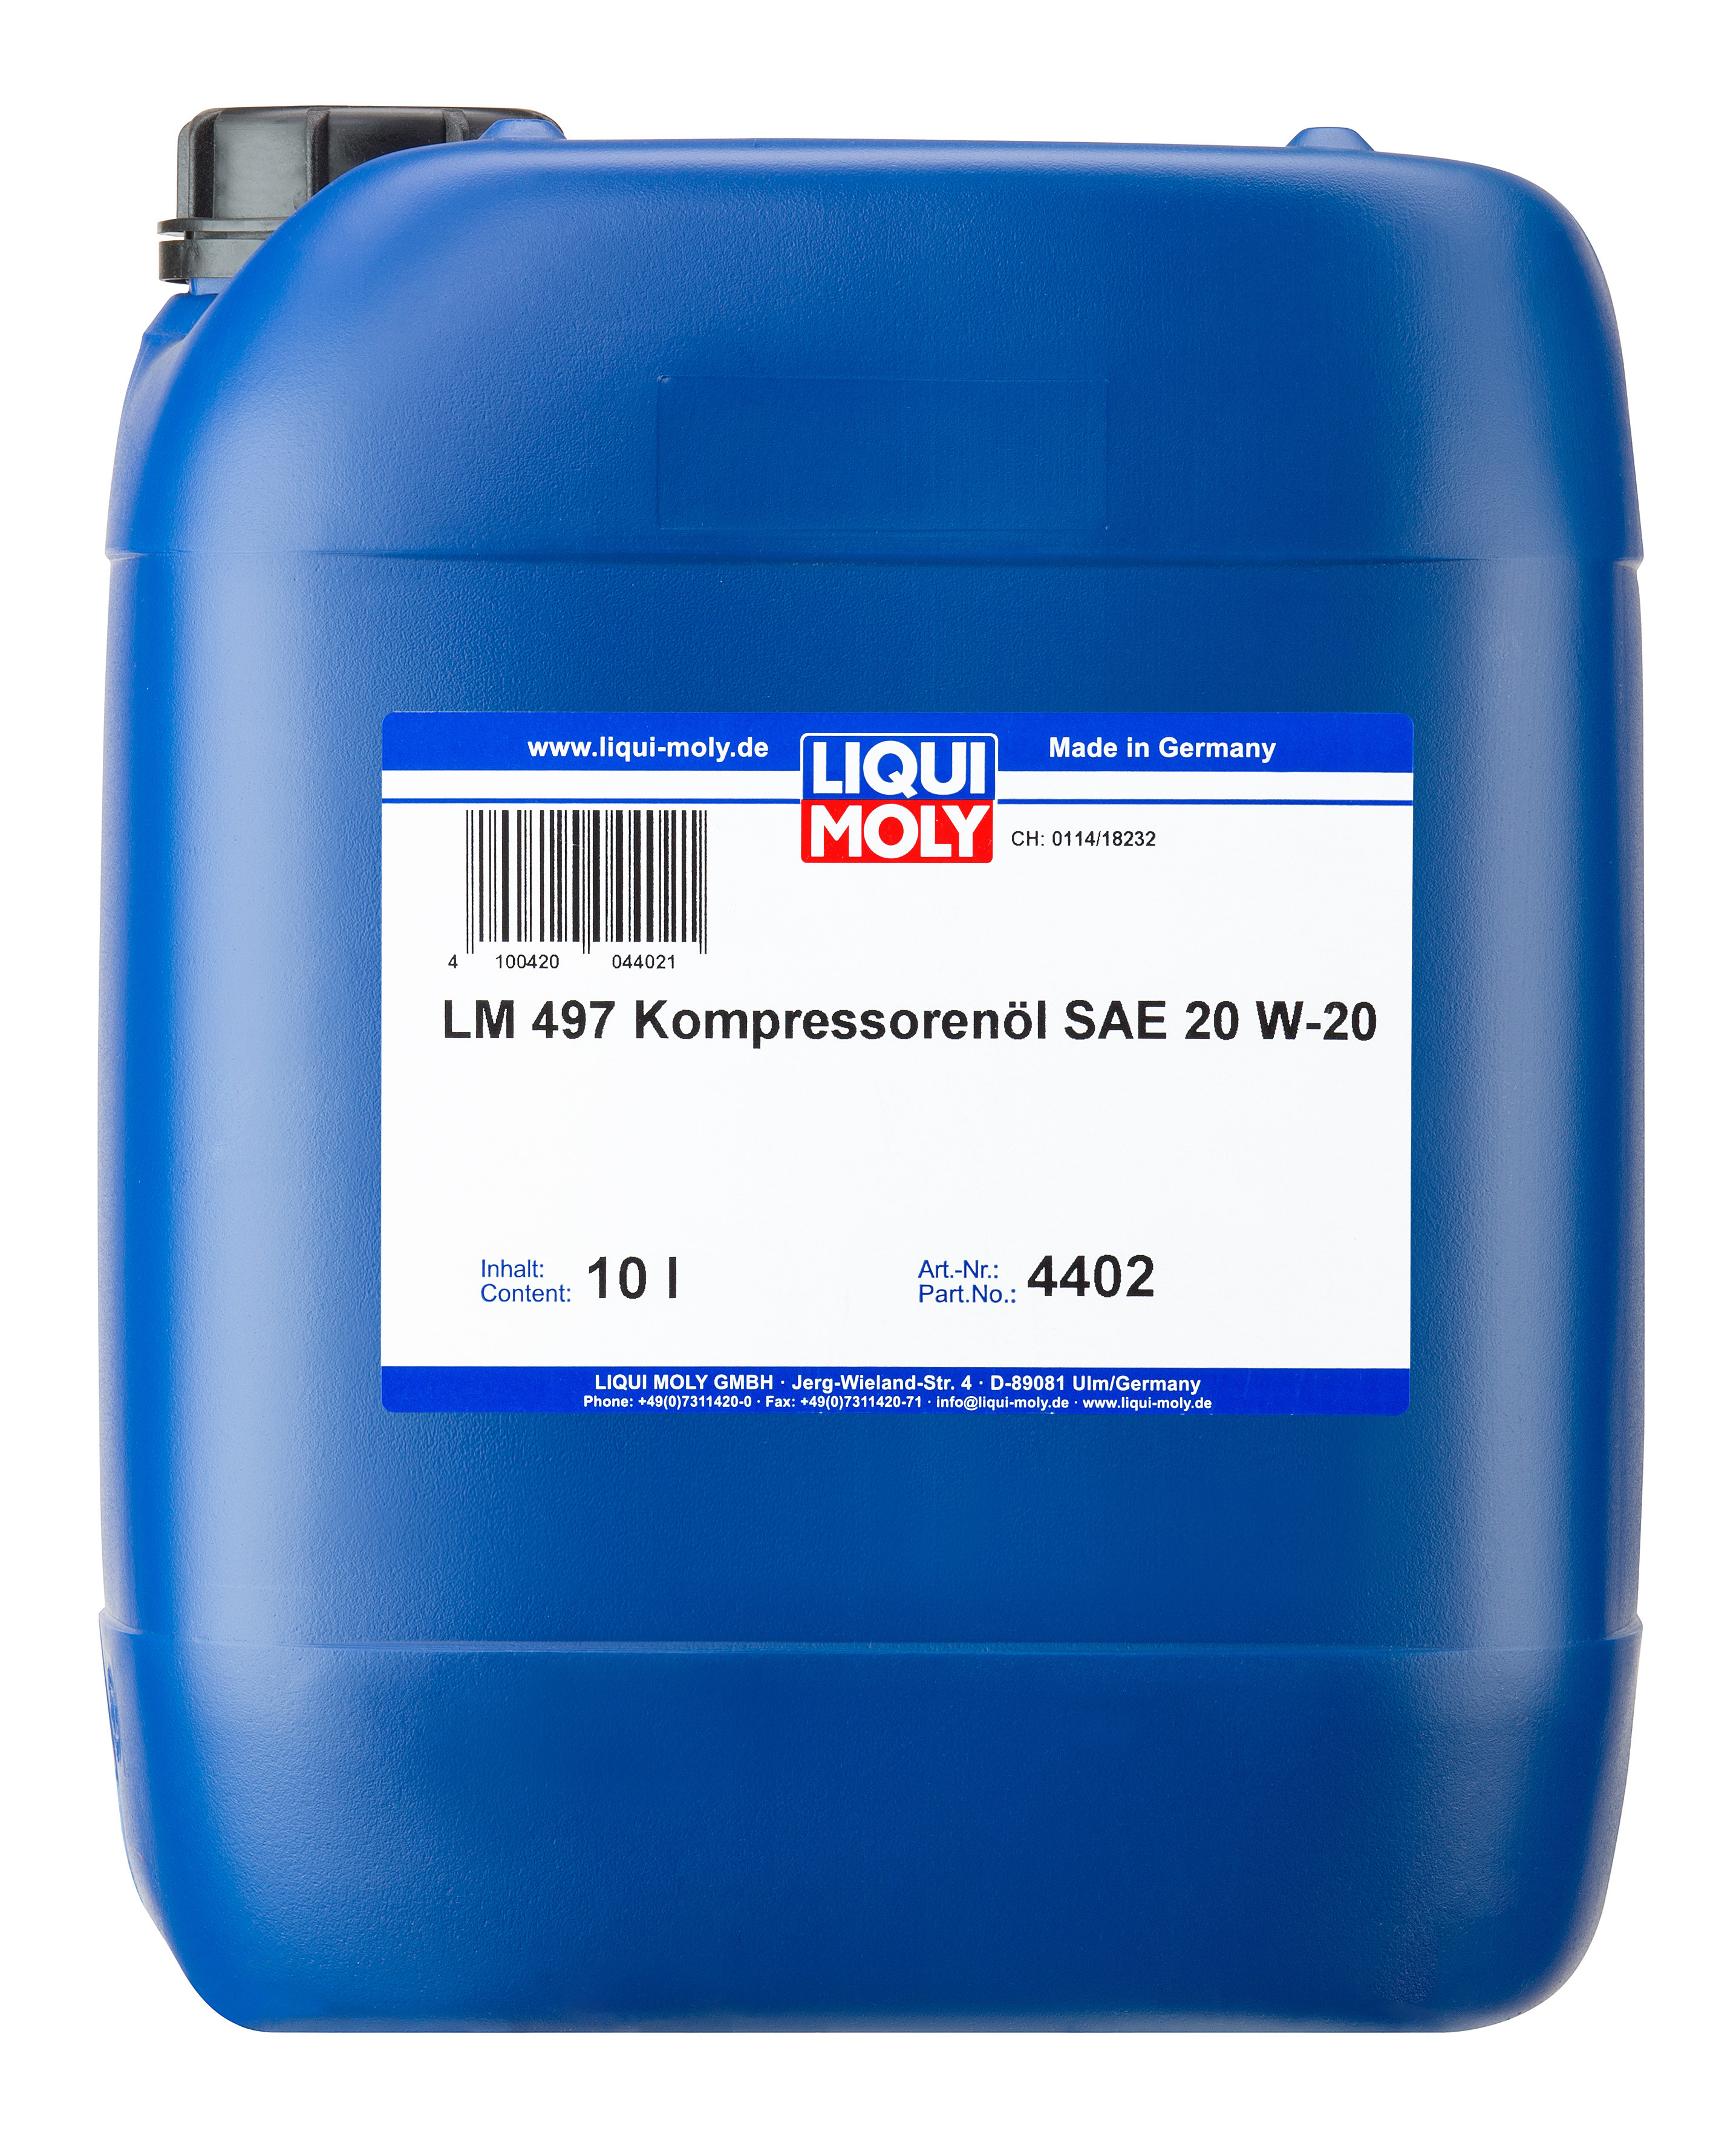 Синтетическое компрессорное масло Liqui Moly LM 497 Kompressorenoil 20W-20 10л